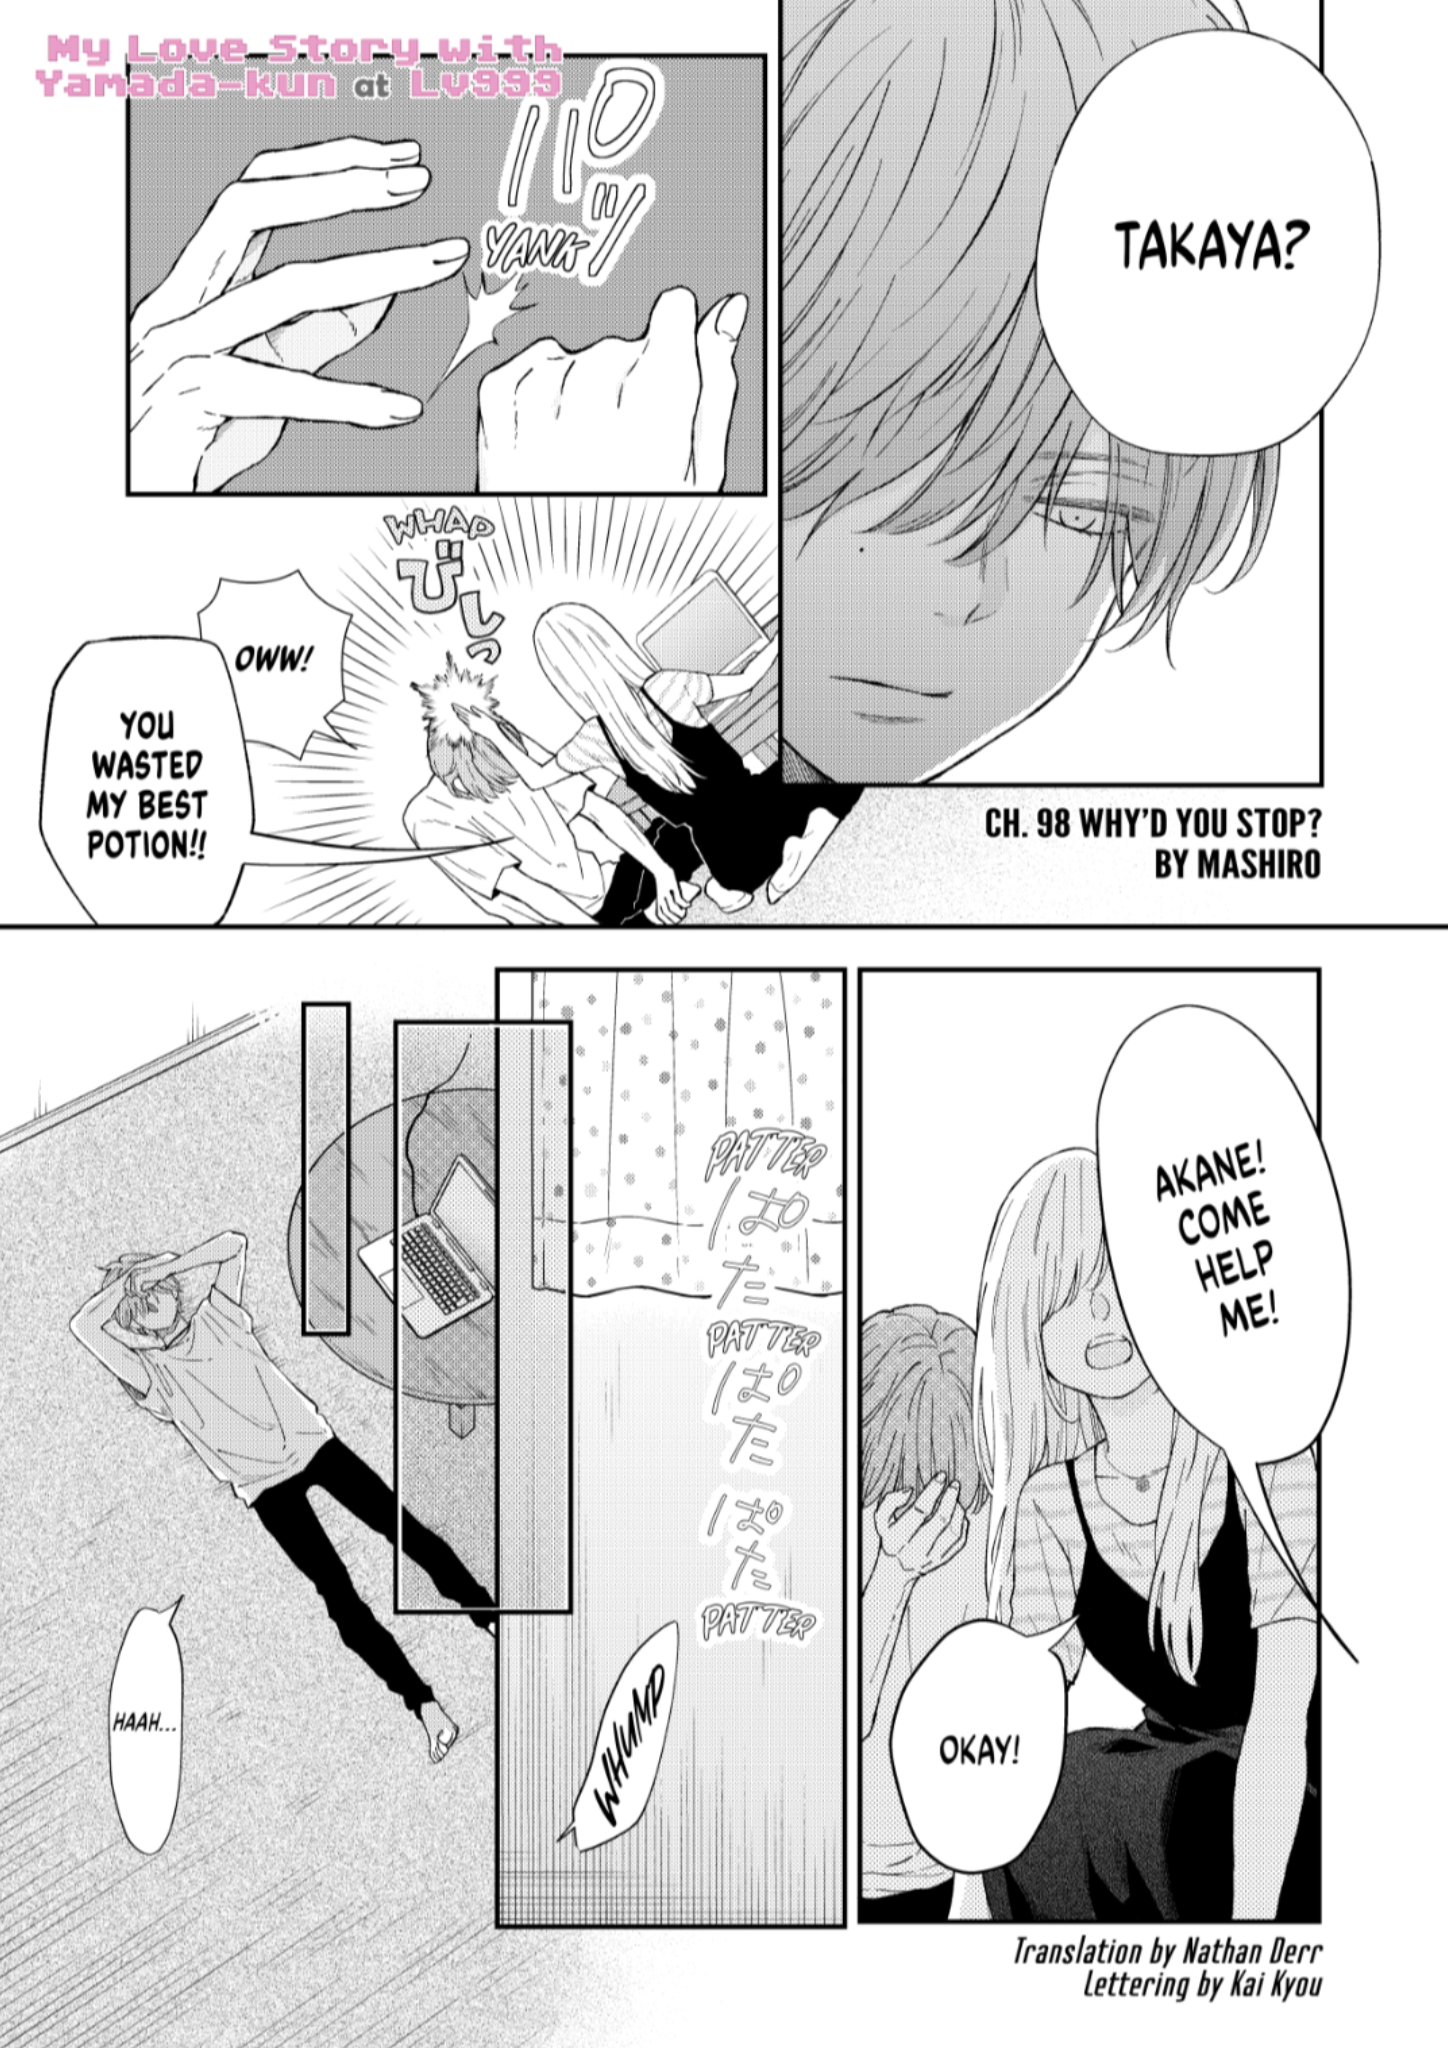 Read My Lv999 Love for Yamada-kun Manga English [New Chapters